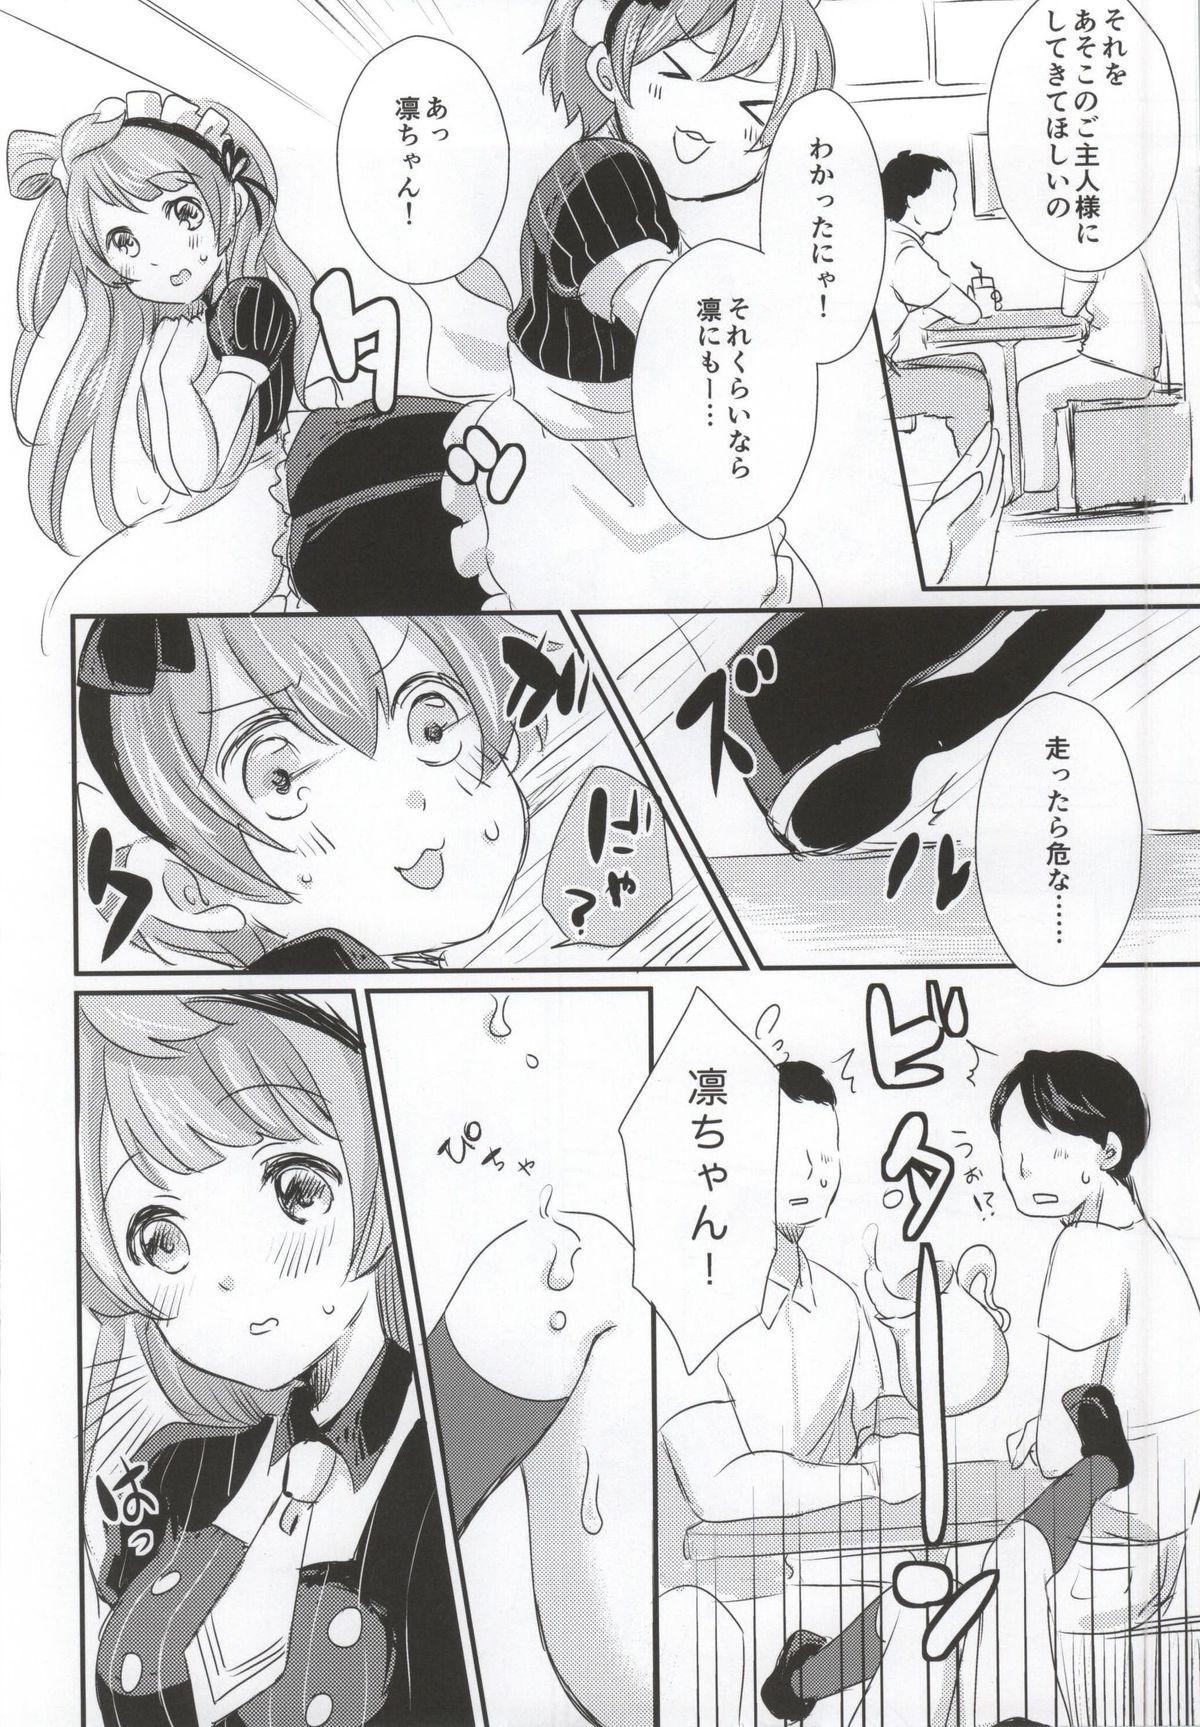 maid Rin cafe 10